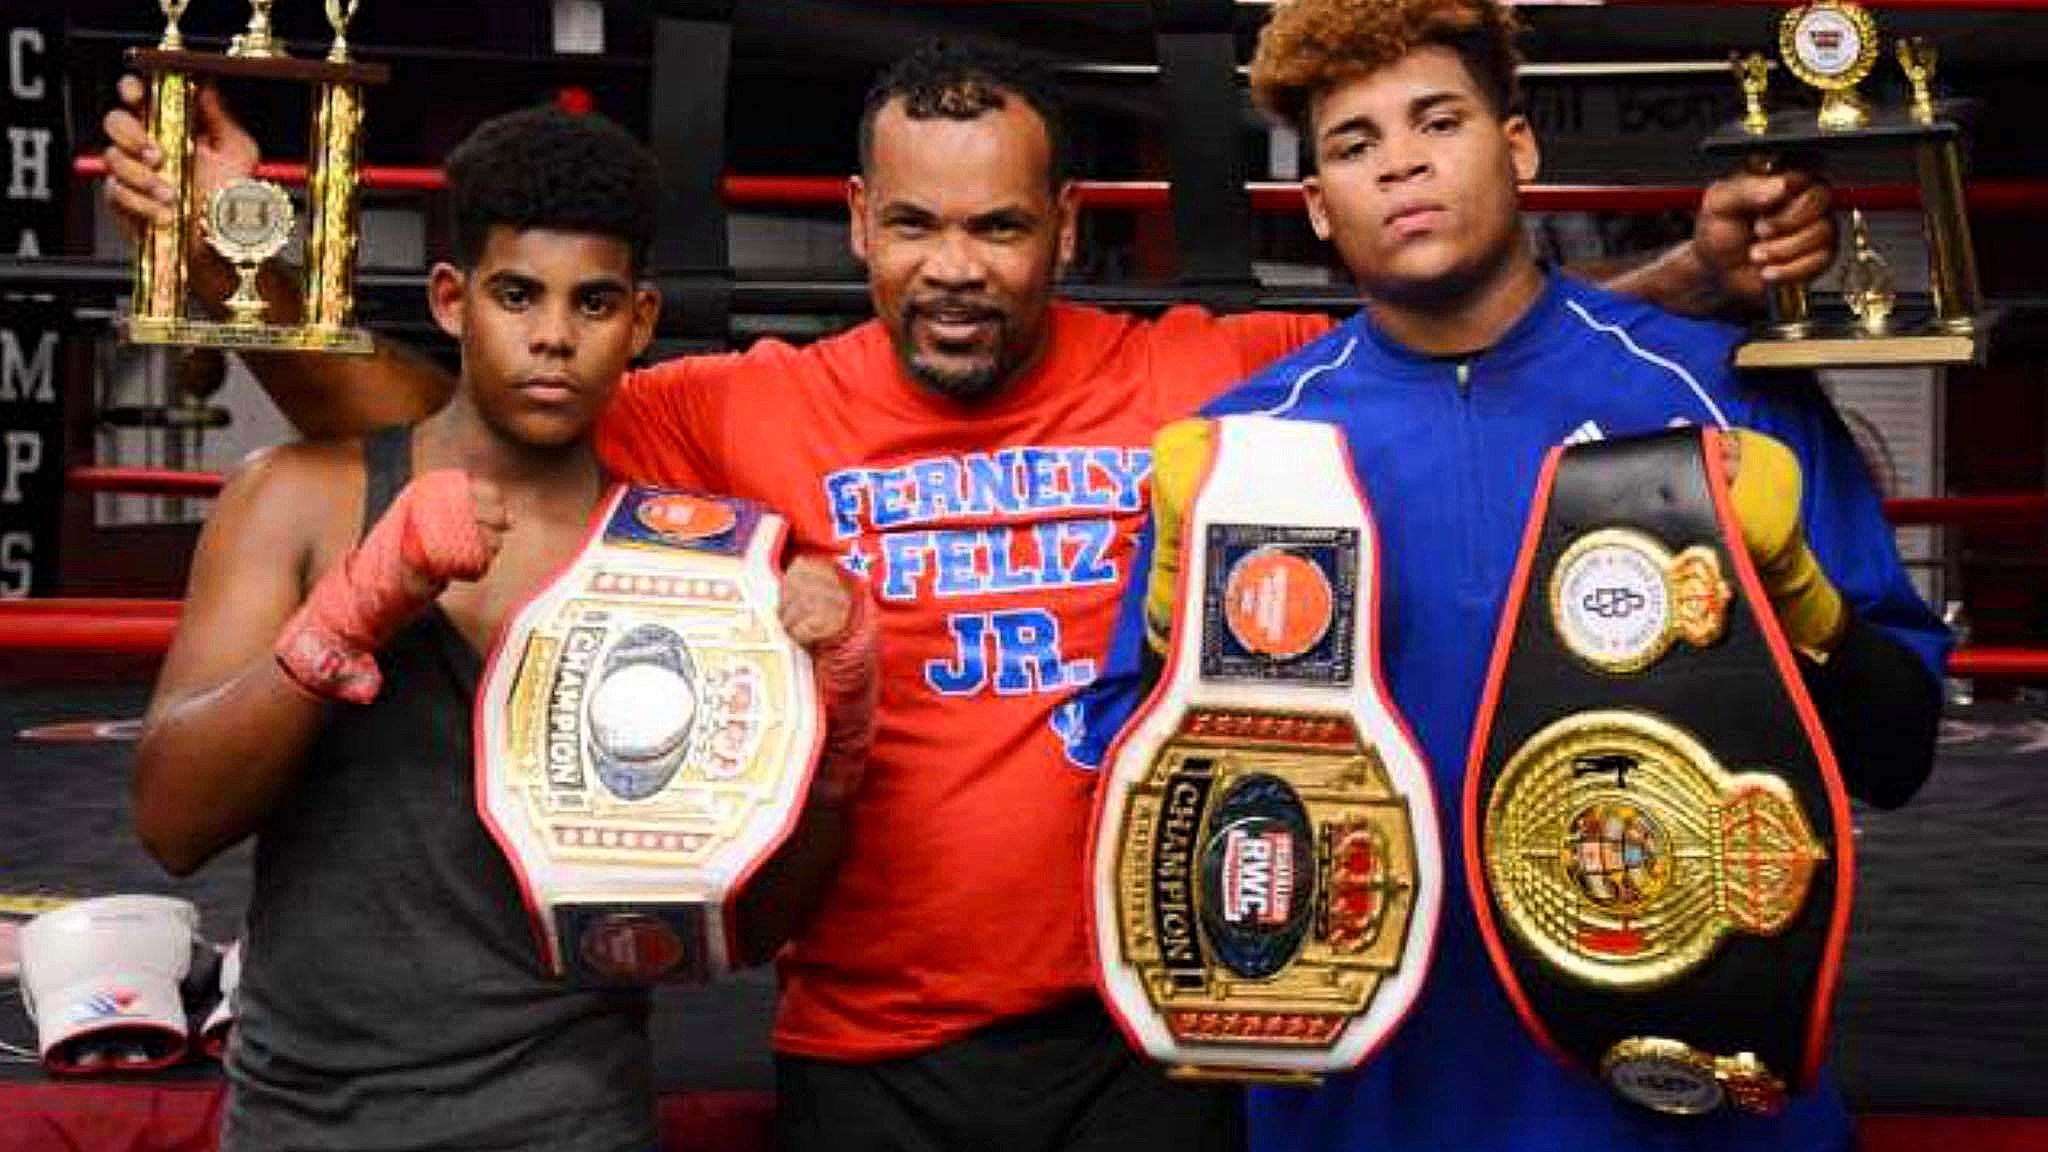 Danbury Boxer Fernely Feliz Jr. Goes From Amateur to Pro